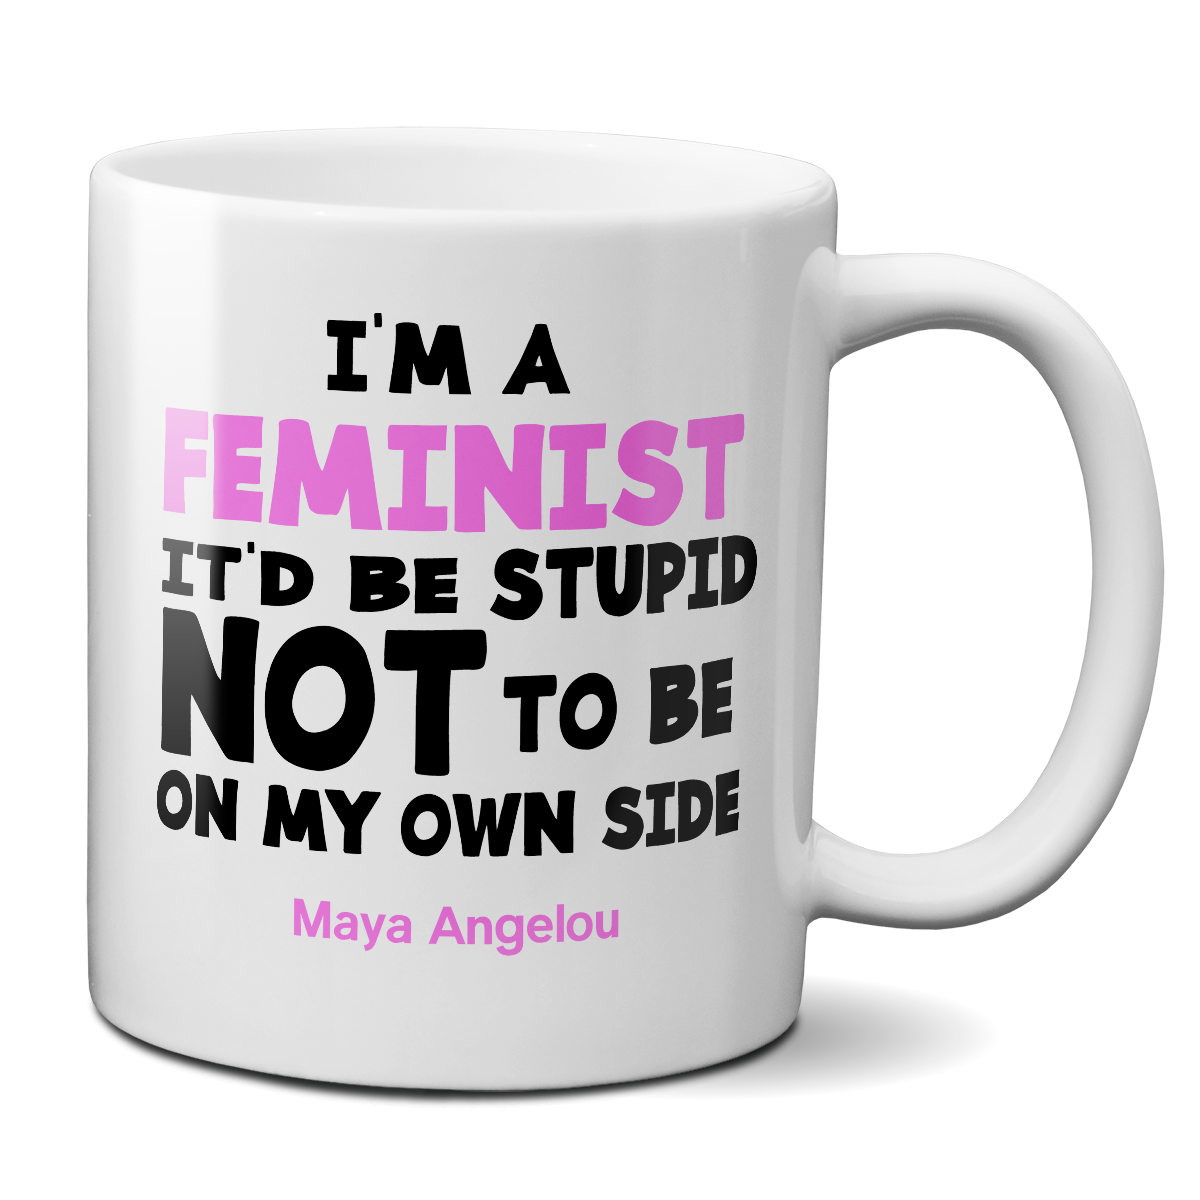 maya angelou feminist quotes